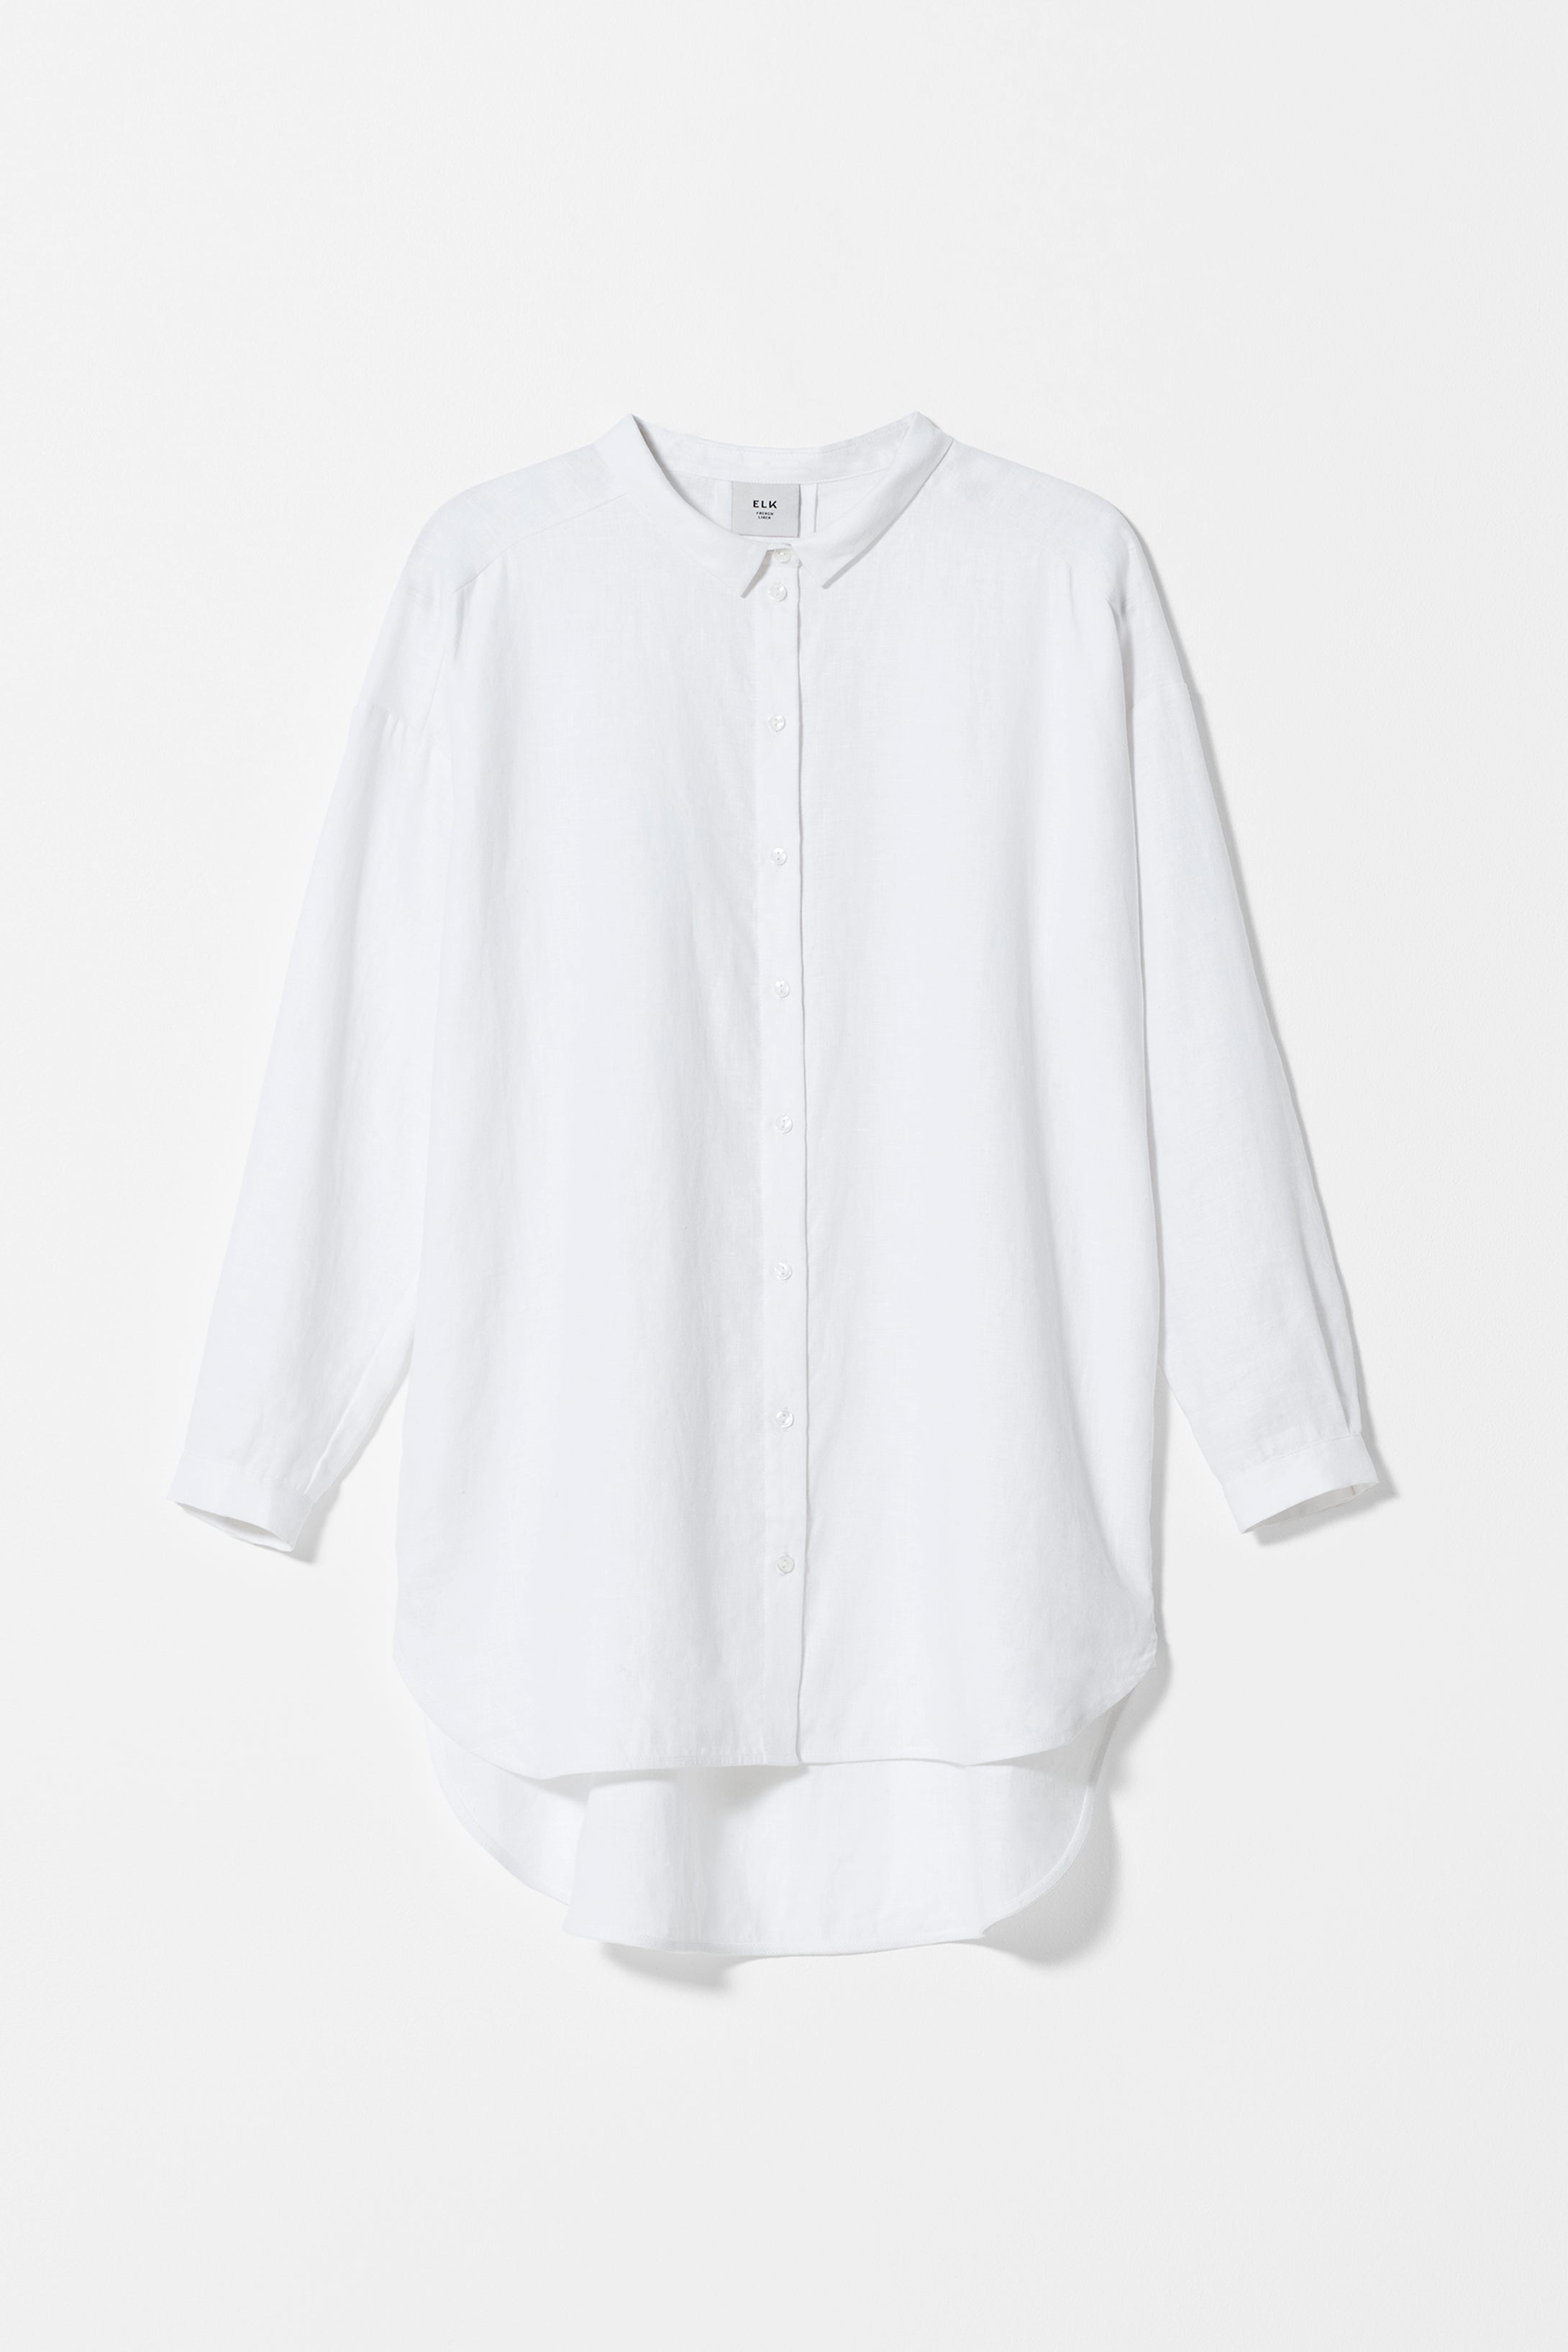 Elk Yenna Linen Shirt White